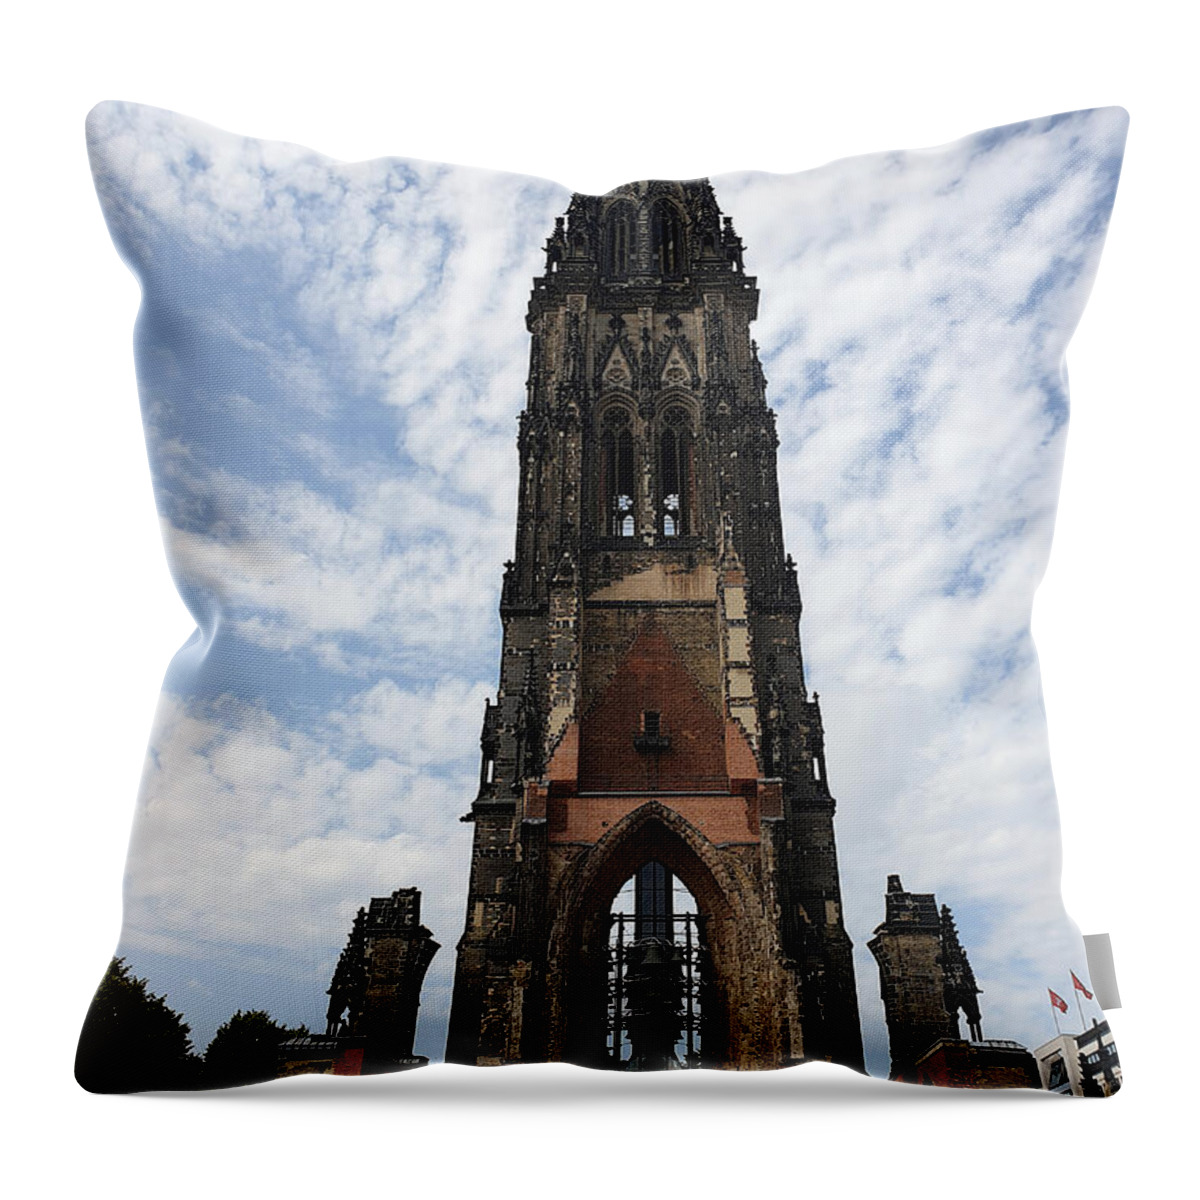 St. Nikolai Church Throw Pillow featuring the photograph St. Nikolai Church, Hamburg by Yvonne Johnstone